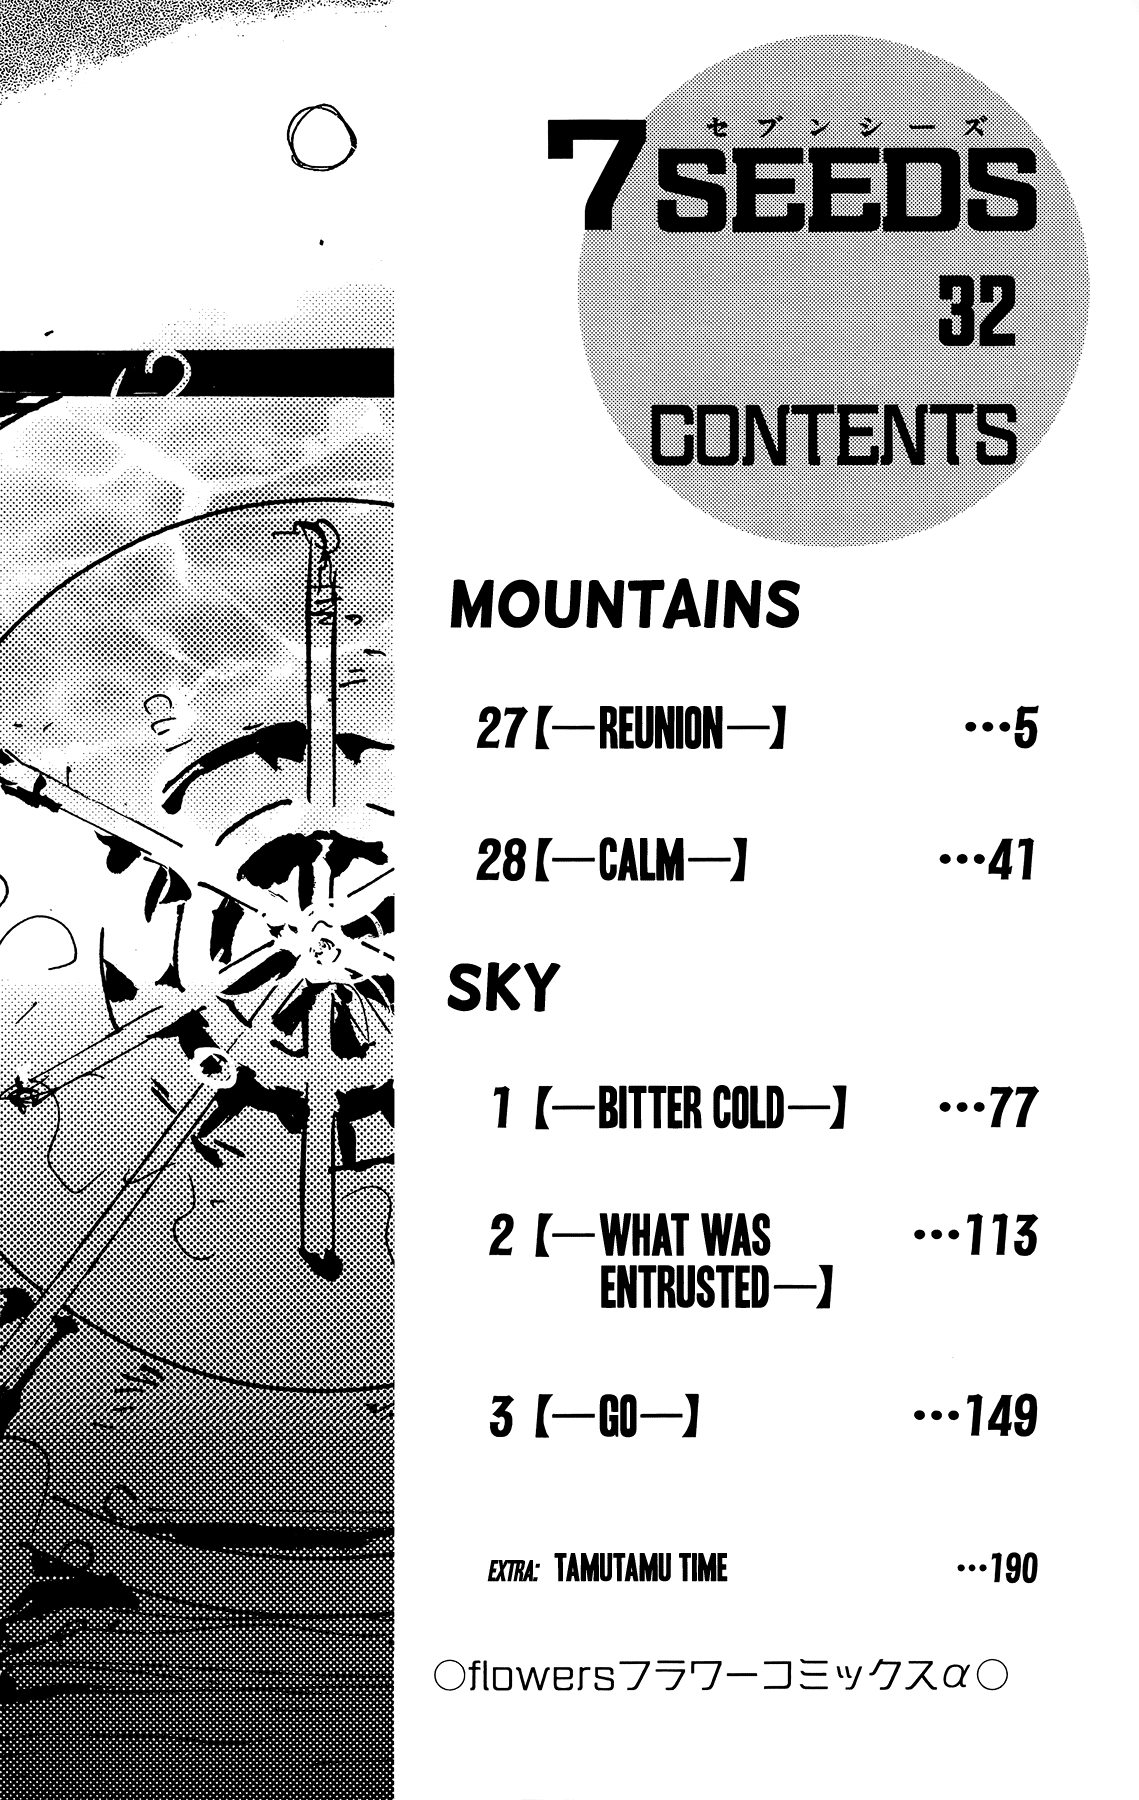 7 Seeds Vol. 32 Ch. 162 Mountains Chapter 27 [Reunion]